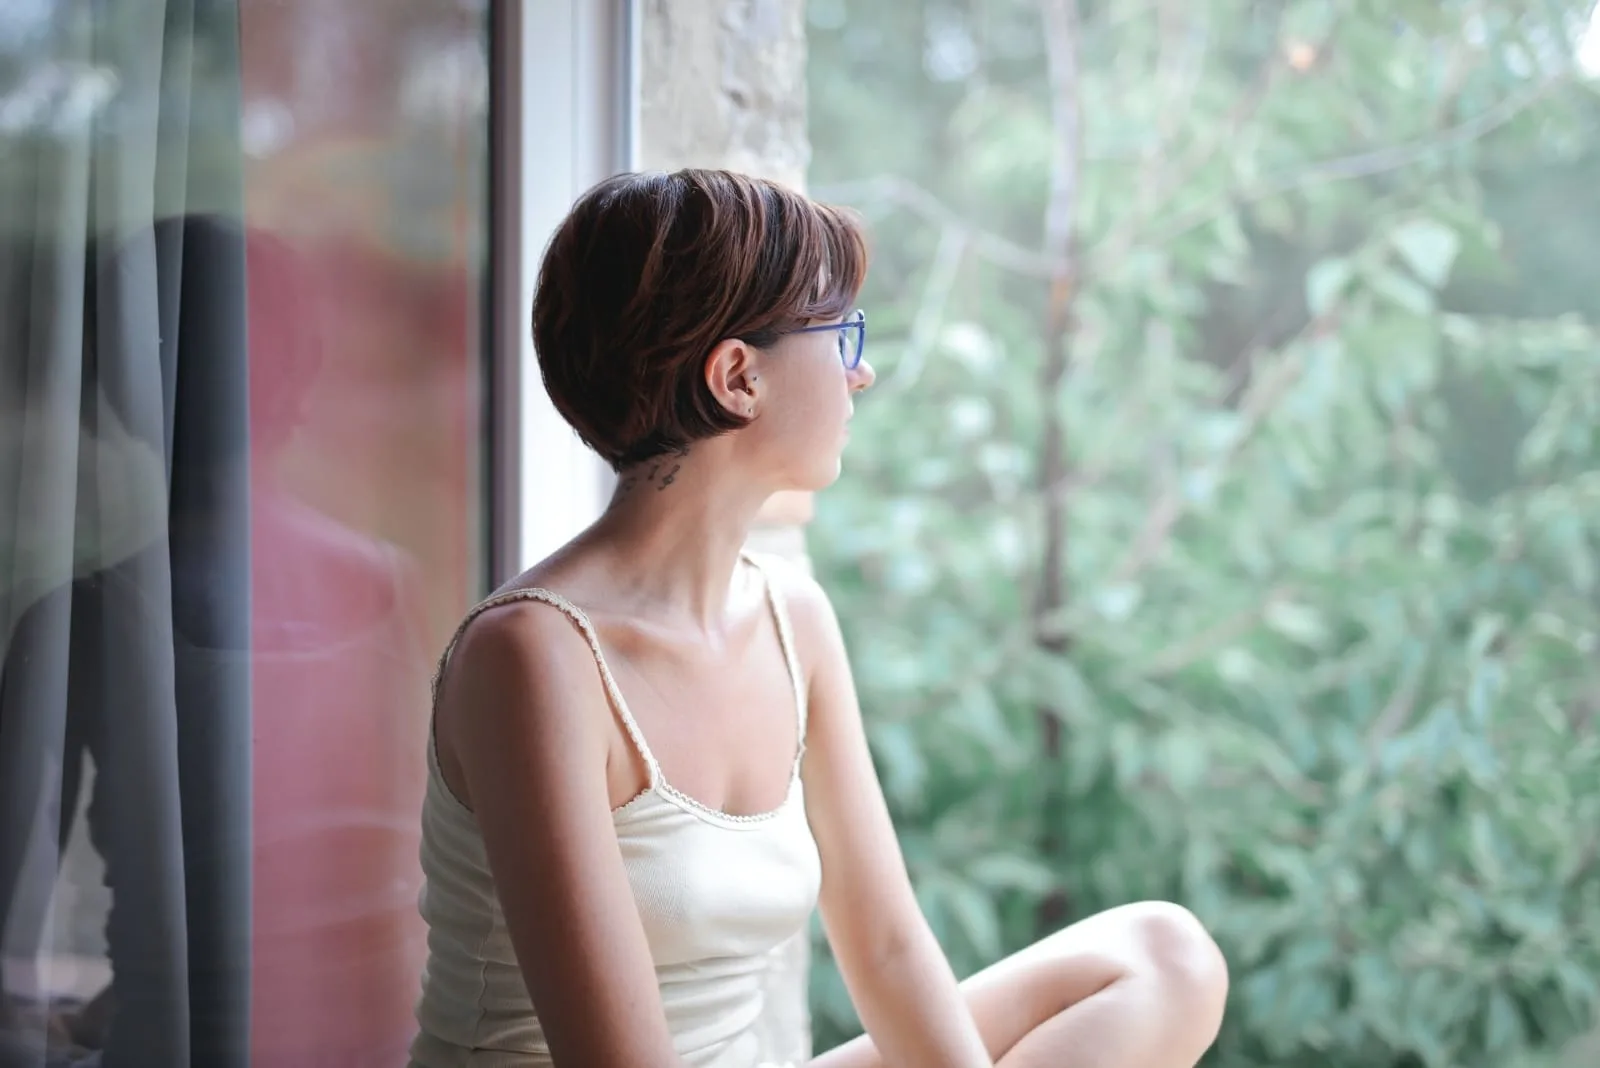 pensive woman sitting on window pane looking outside